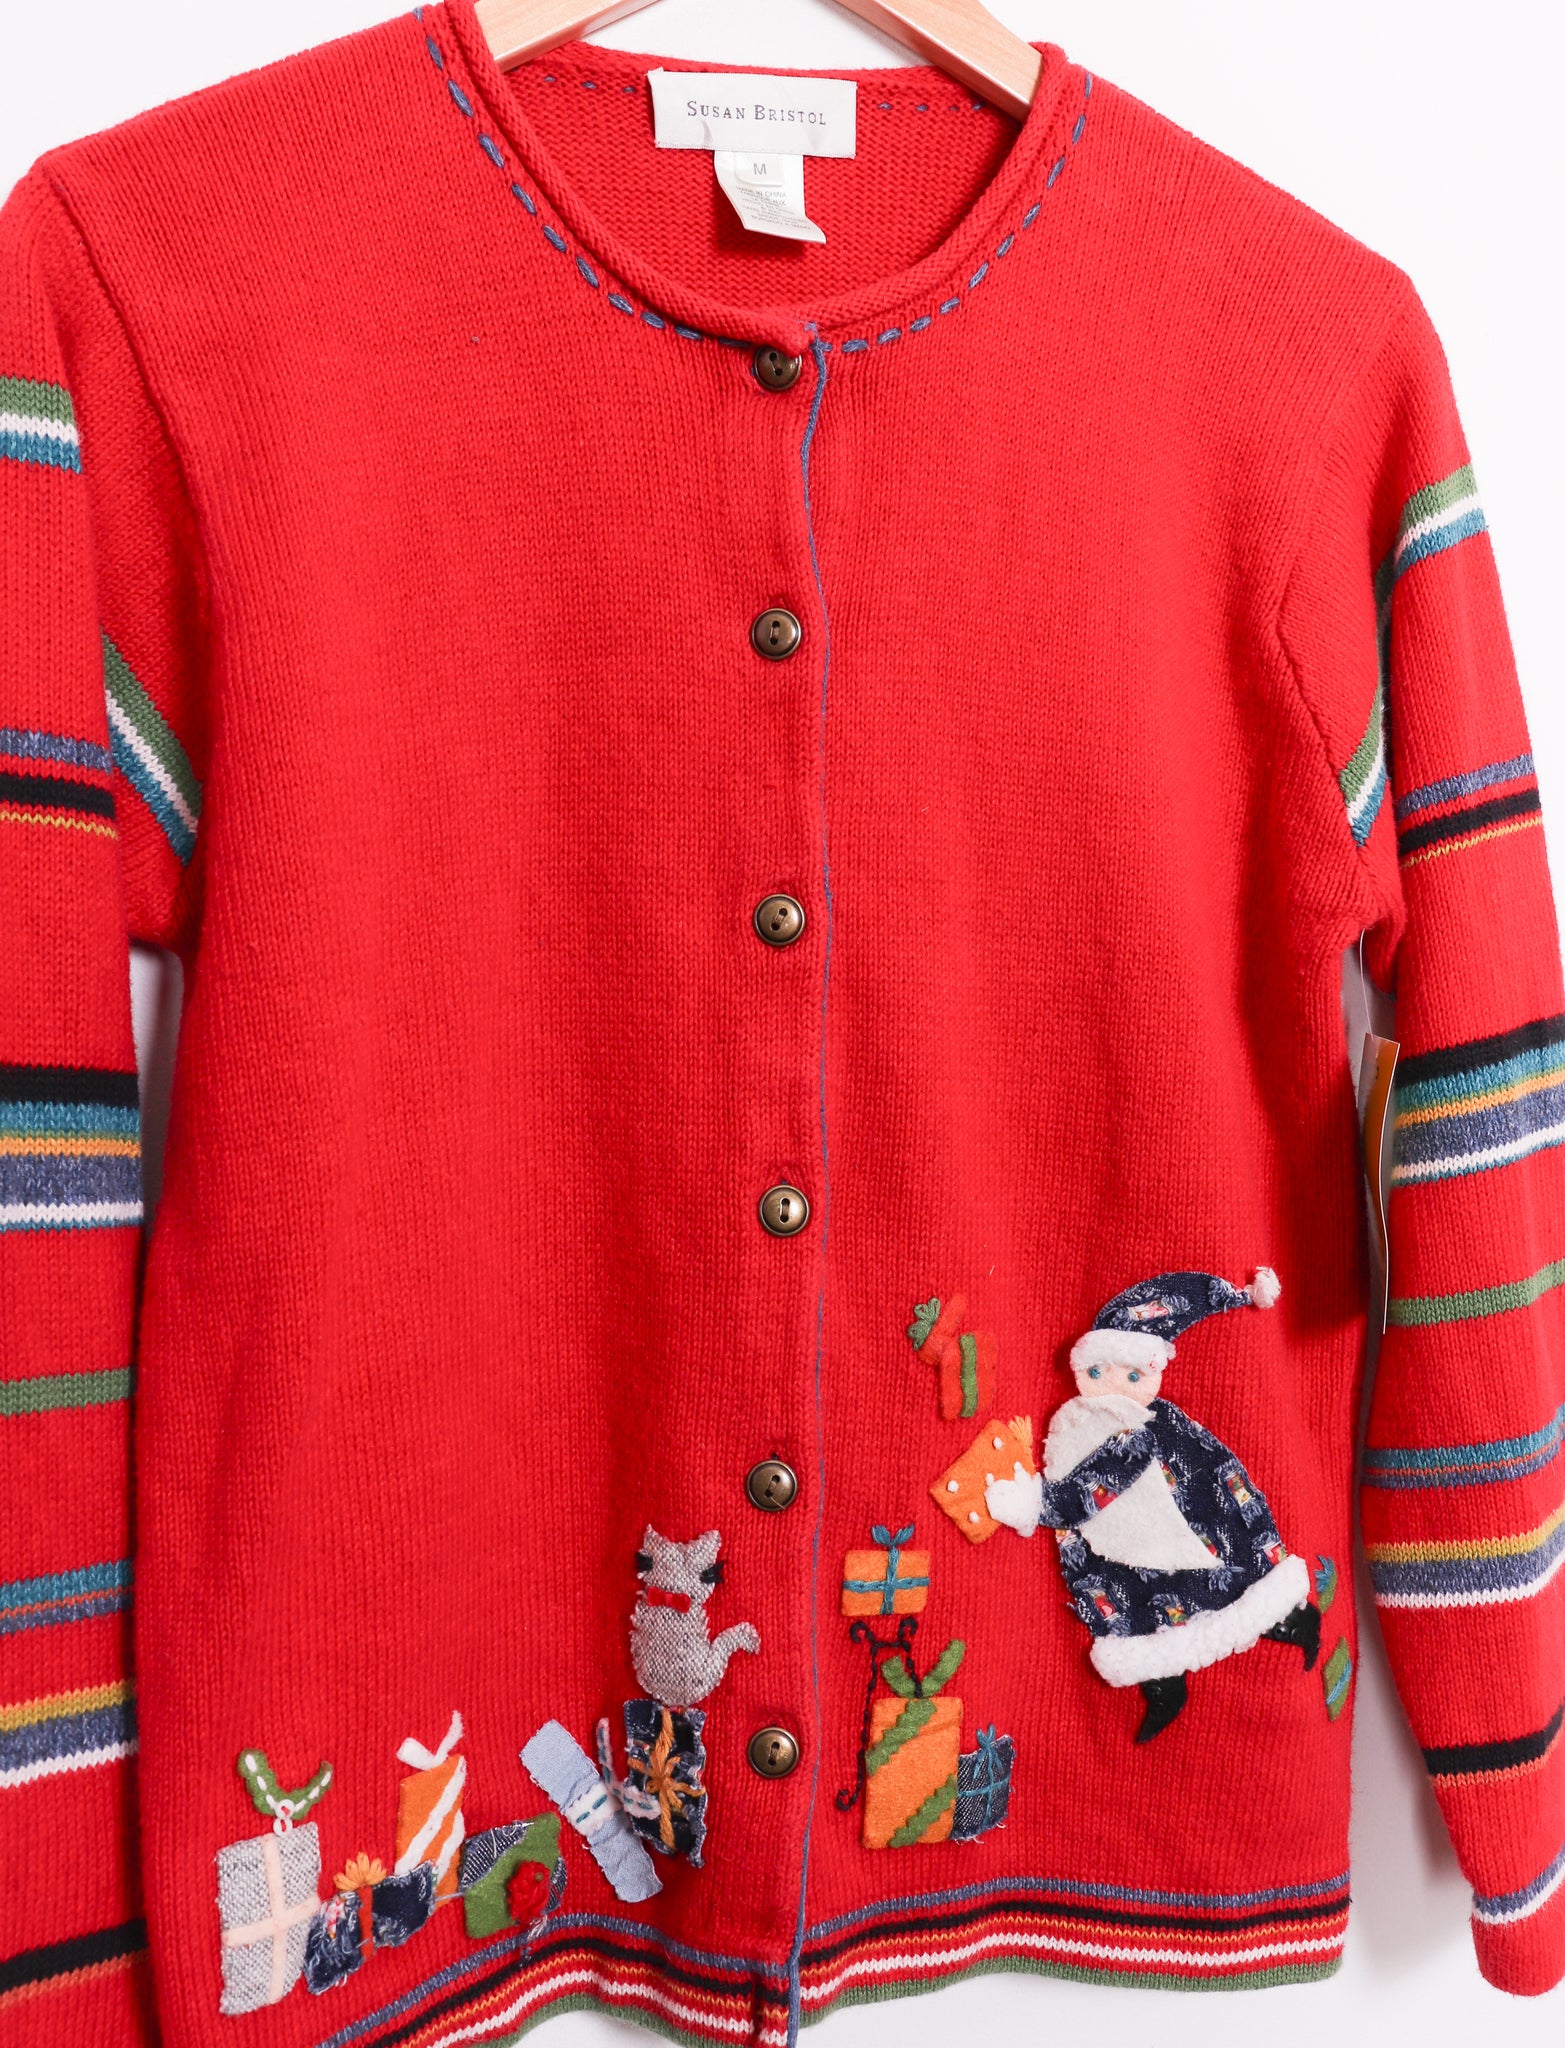 Susan Bristol Funky Santa and Cat Christmas Sweater